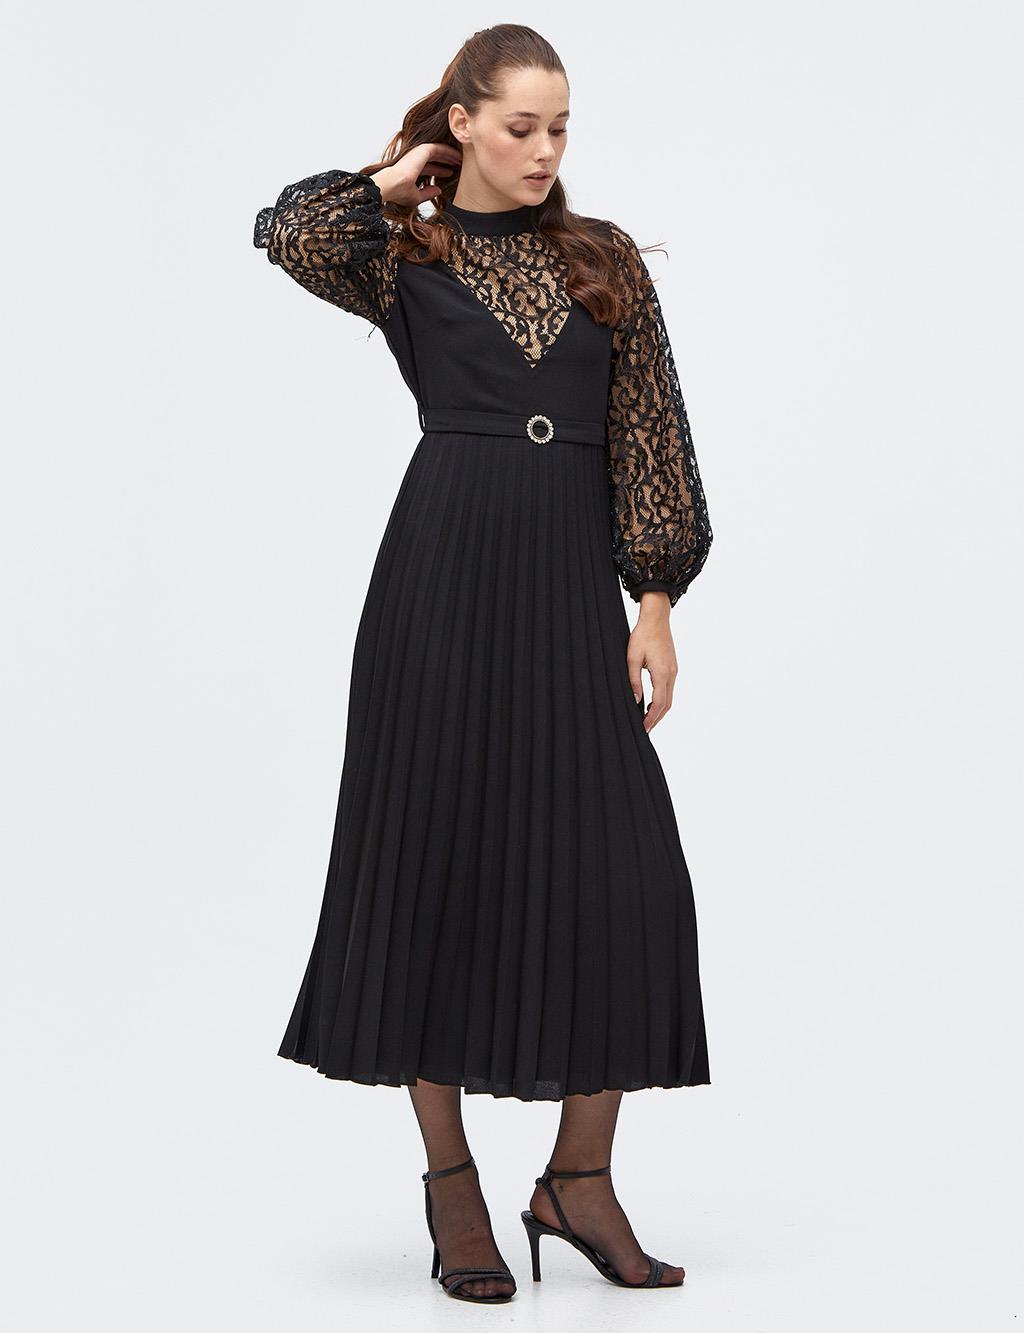 Skirt Pleated Lace Dress Black